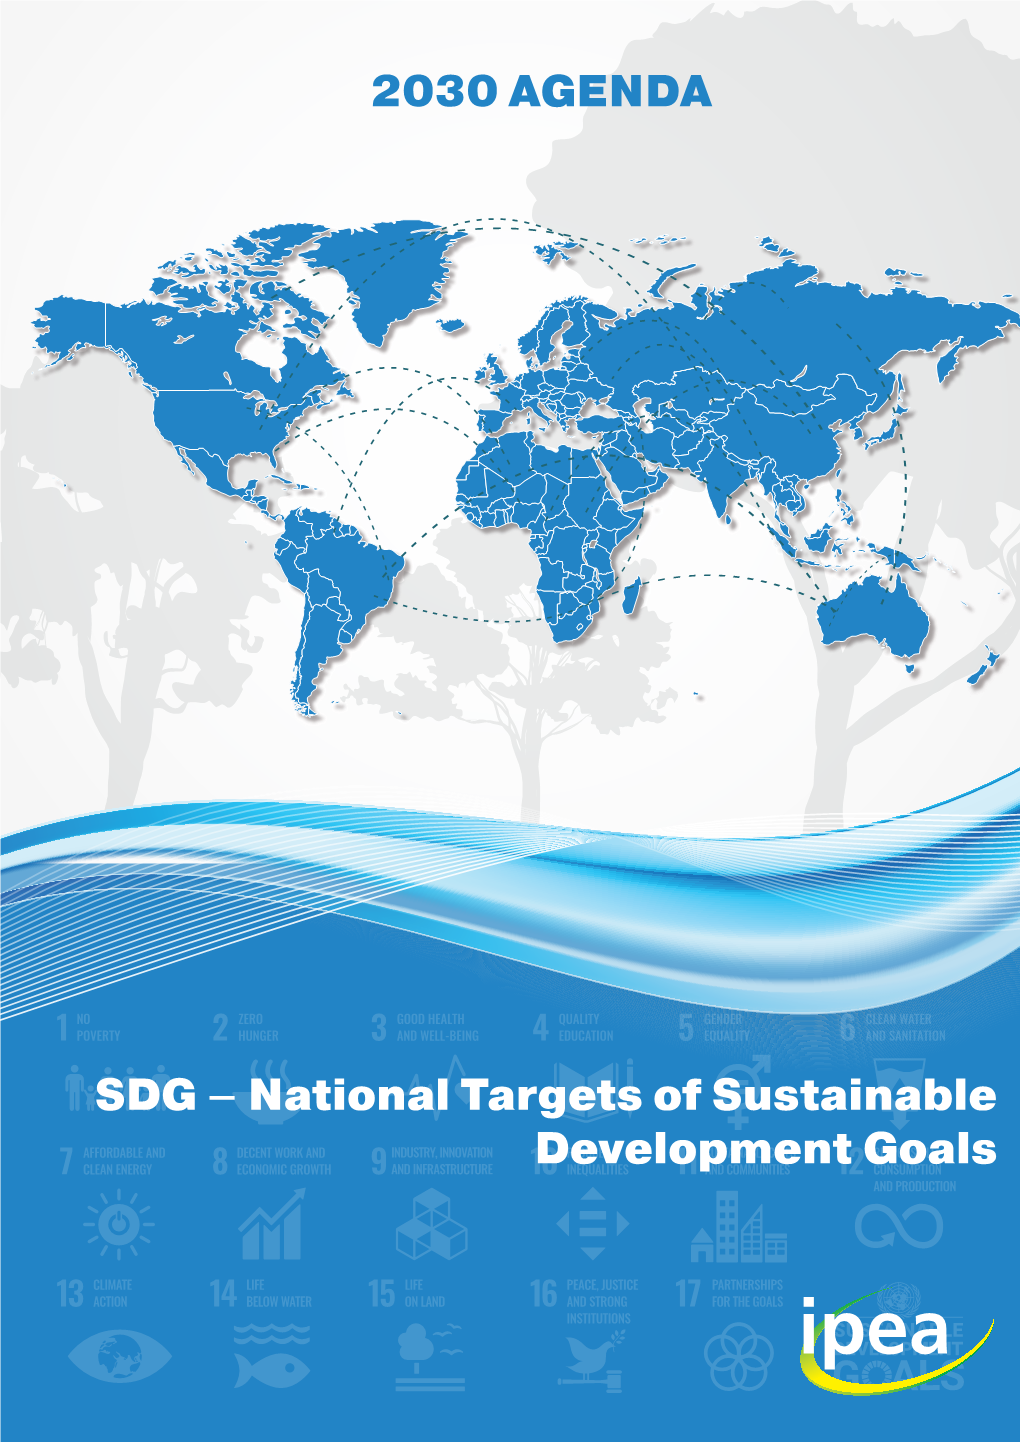 SDG – National Targets of Sustainable Development Goals